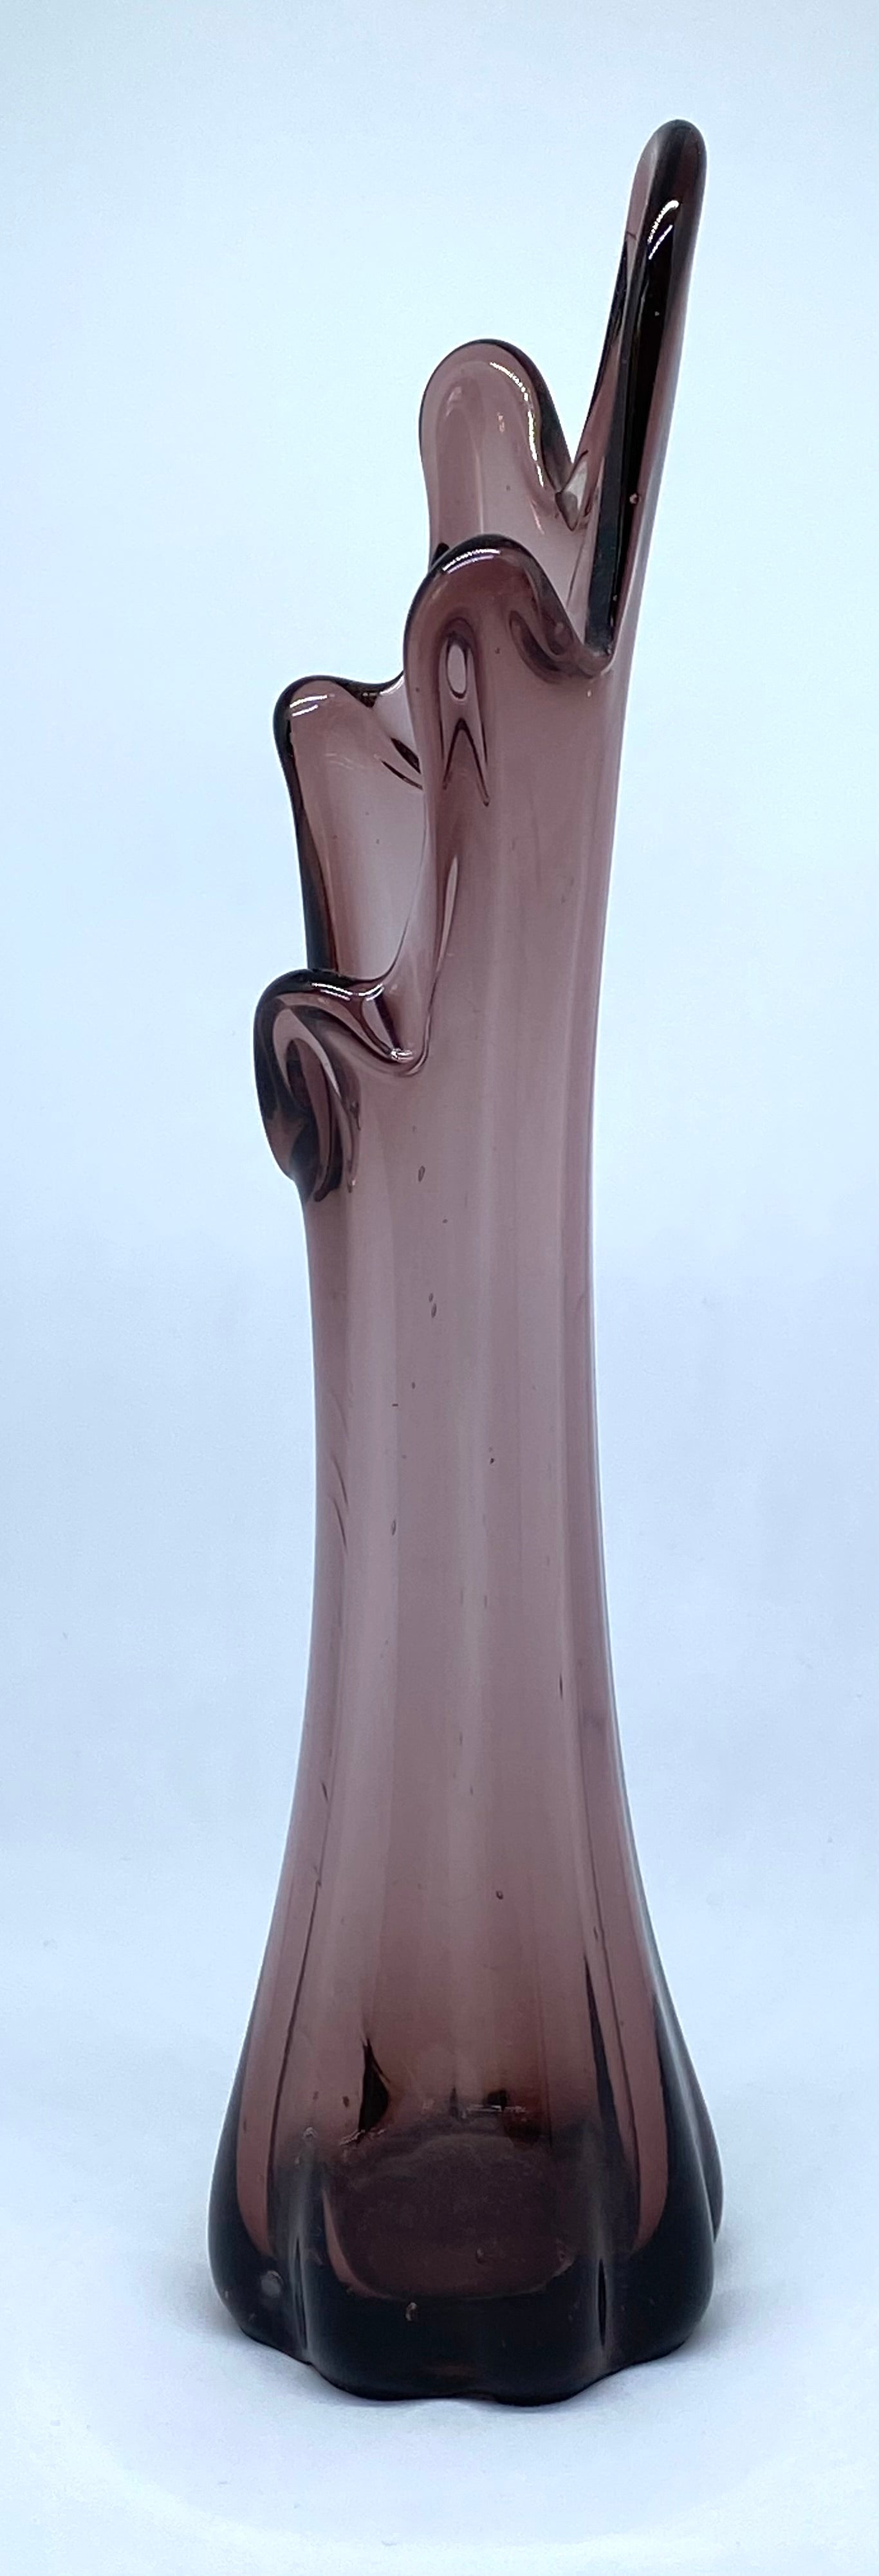 'Murano' style finger glass vase - purple